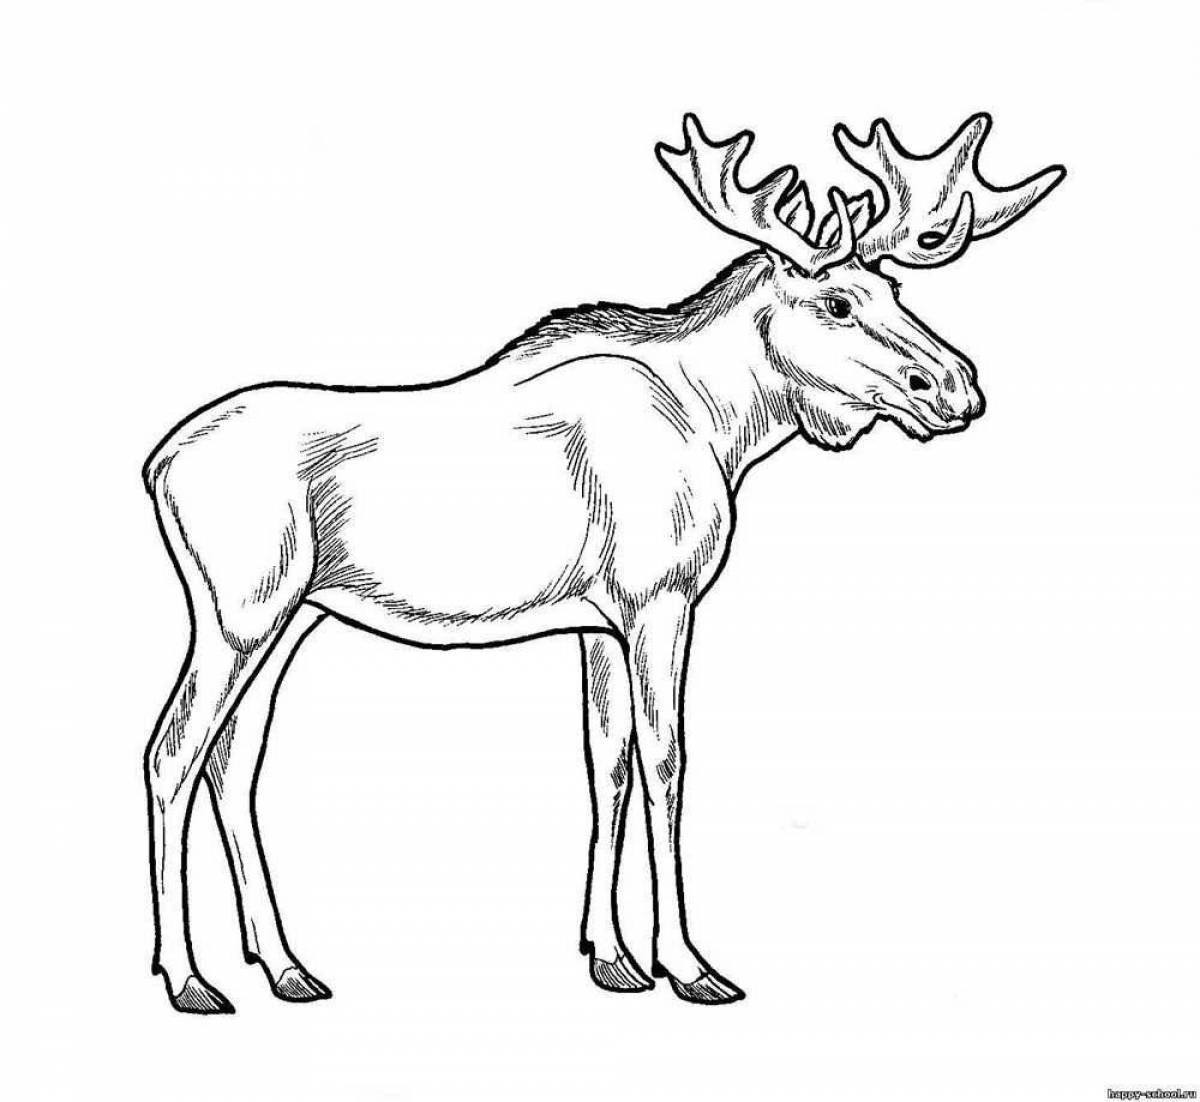 Shiny elk coloring book for kids